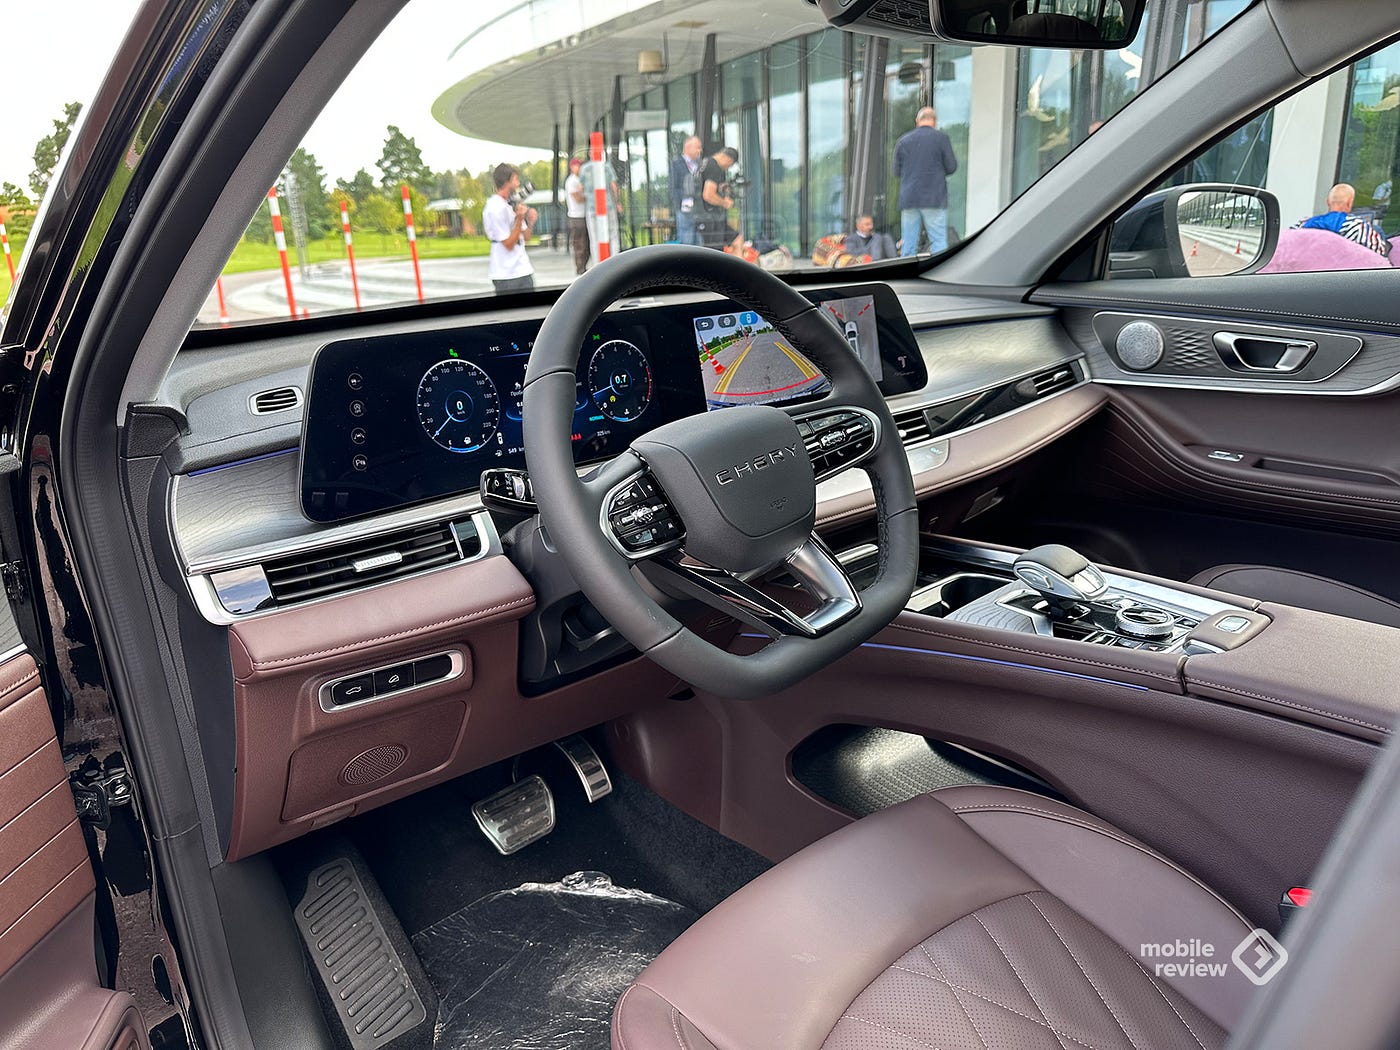 2021 Chery Tiggo7 Pro Review - Behind the Wheel 